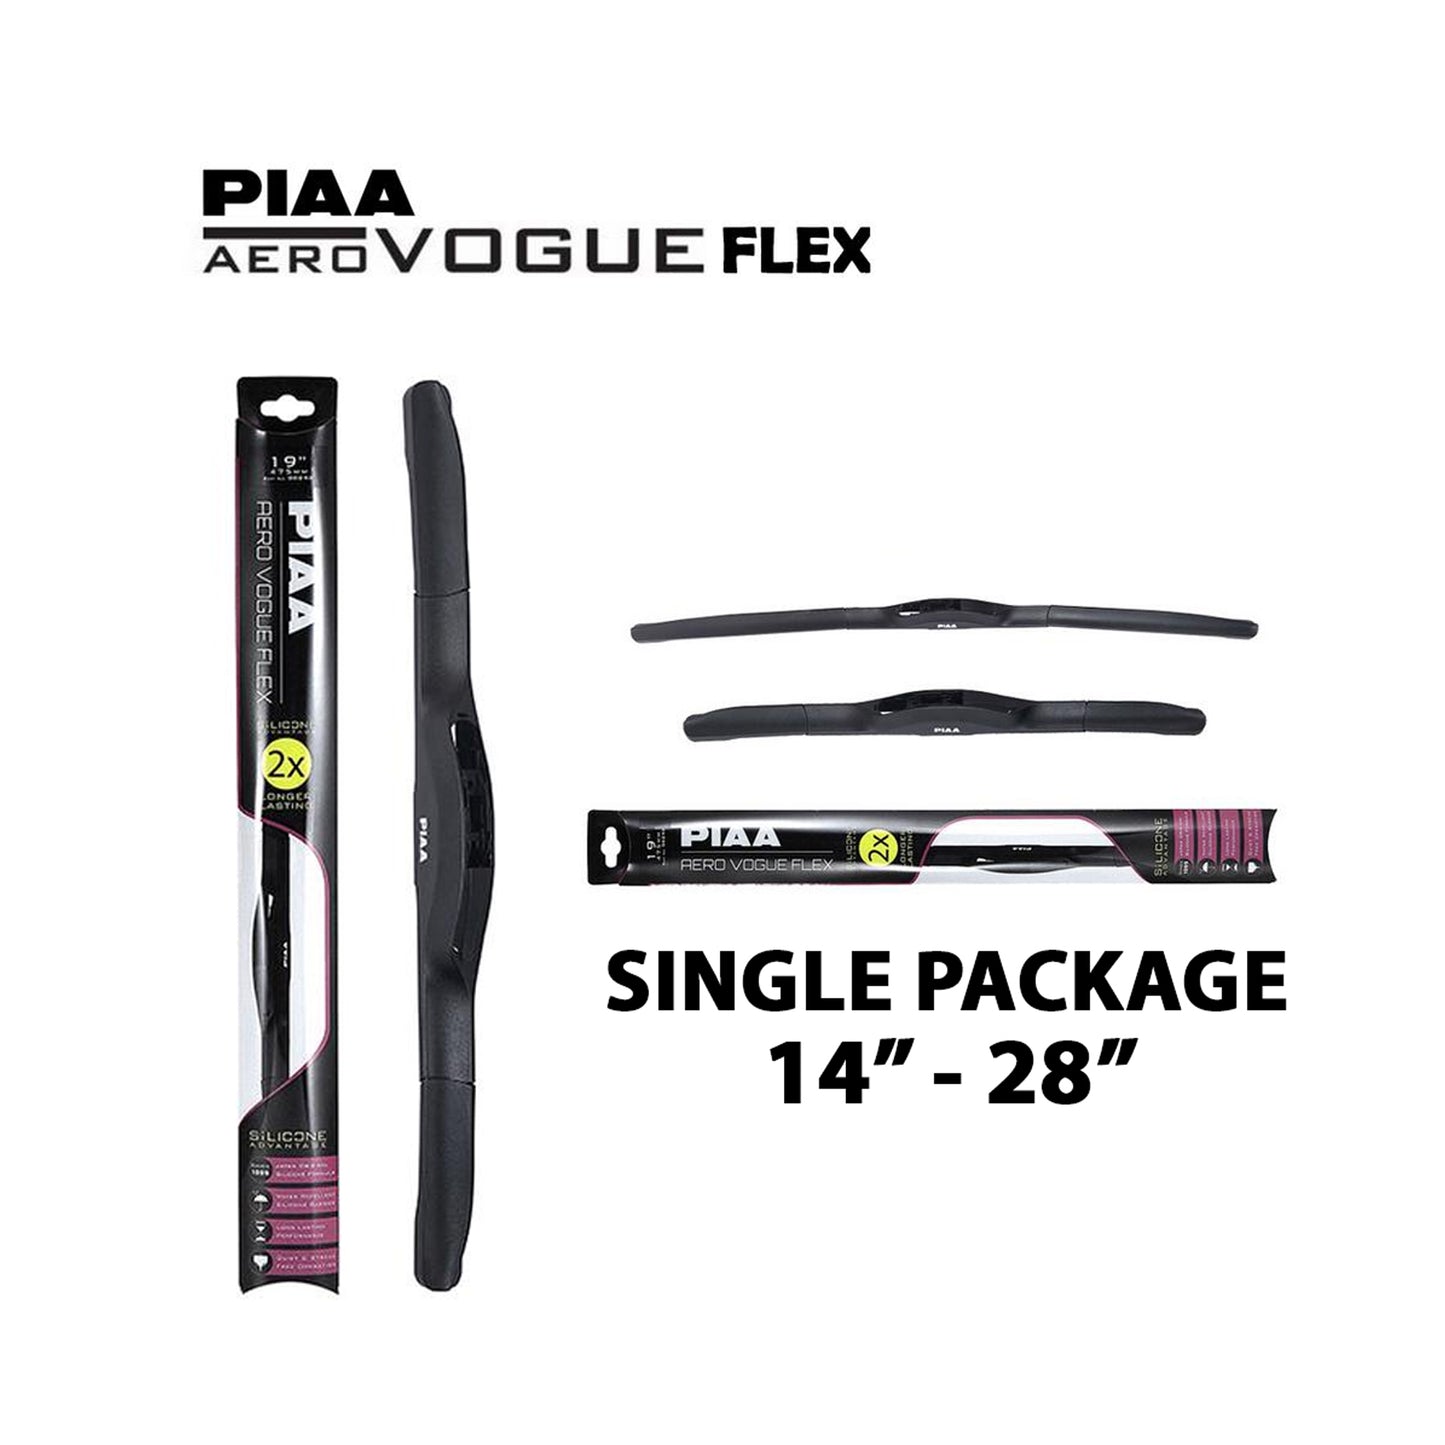 PIAA AERO VOGUE FLEX Car Wiper ( 16" ) - Black (Barcode: 4960311050926 )